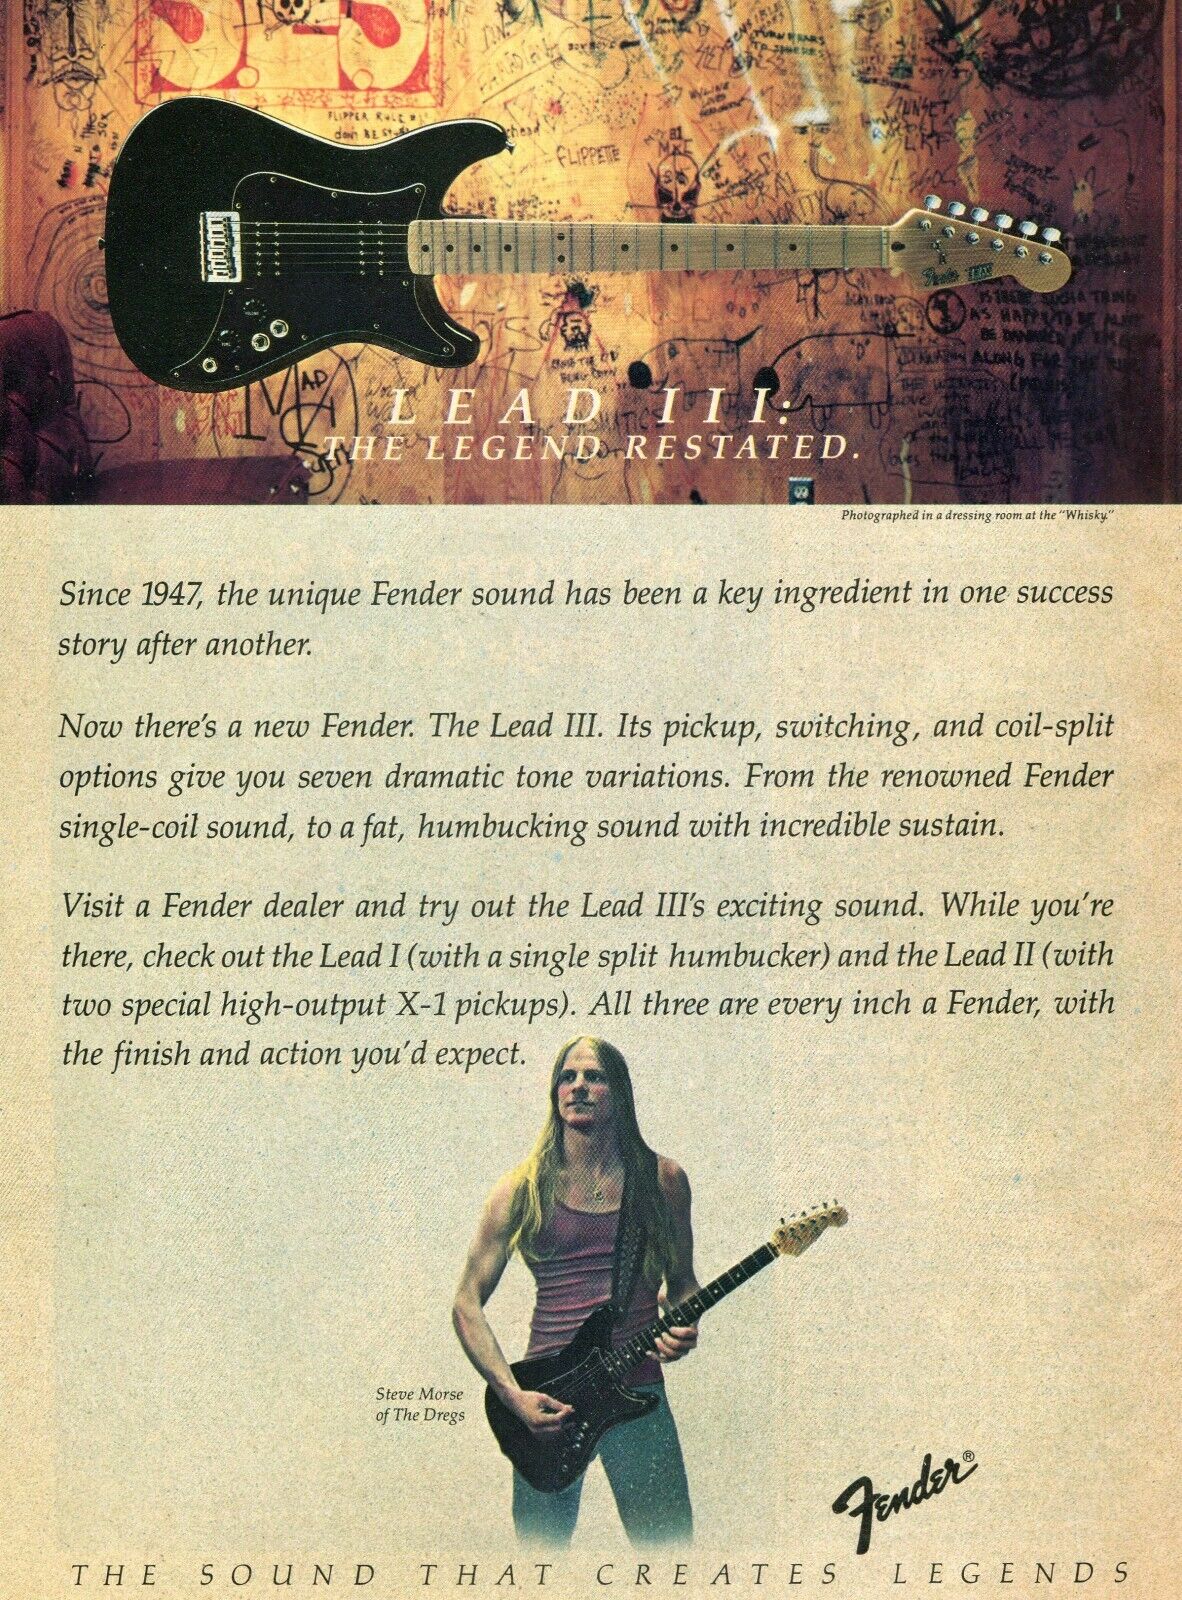 1982 Print Ad of Fender Lead III Guitar w Steve Morse The Dregs @ Whisky a Go-Go